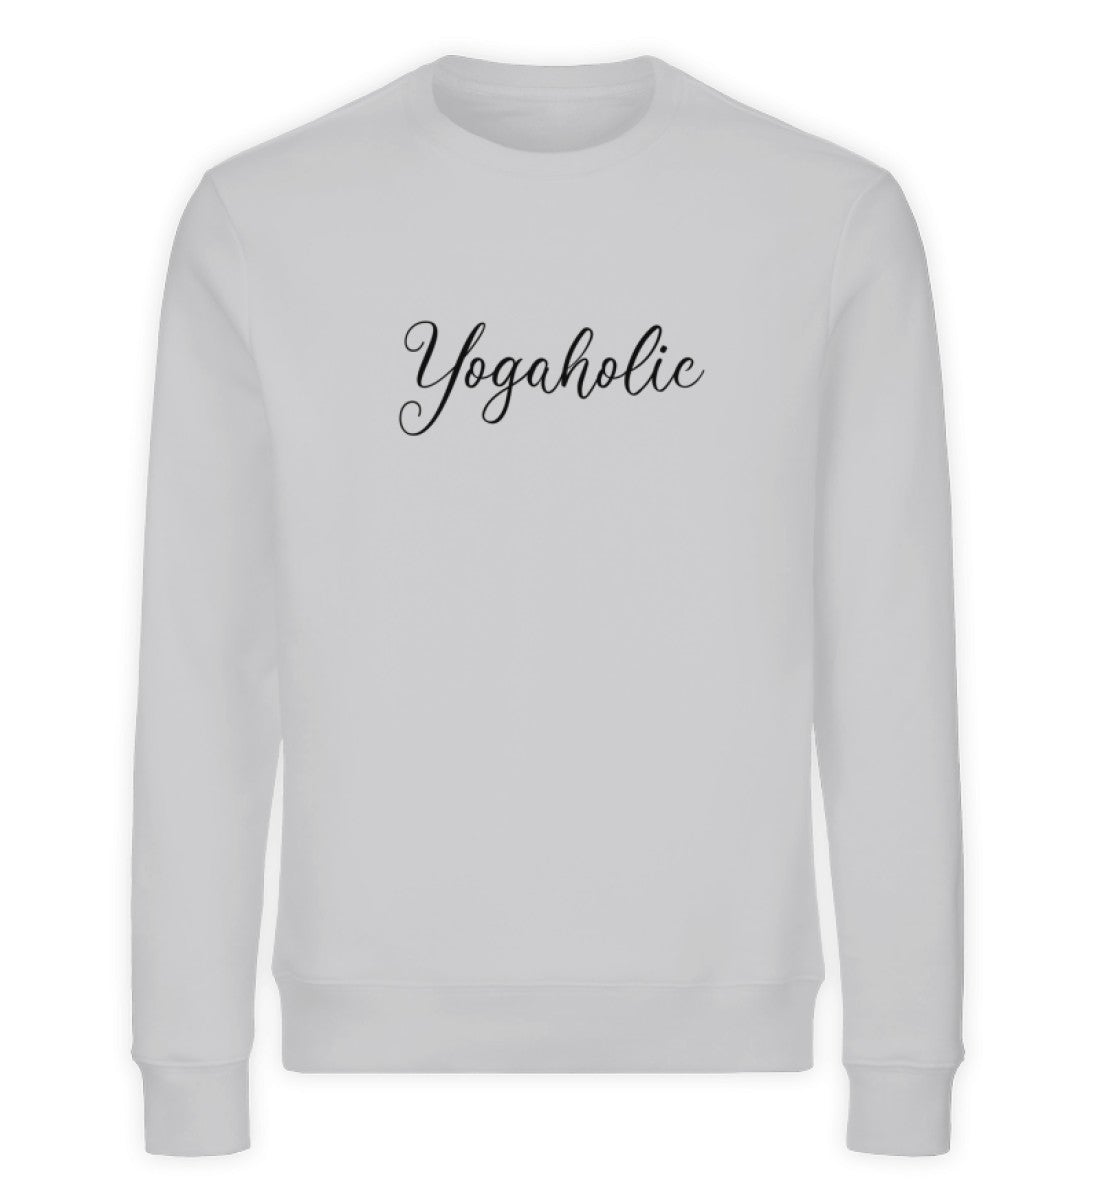 Yogaholic Bio Sweatshirt Unisex